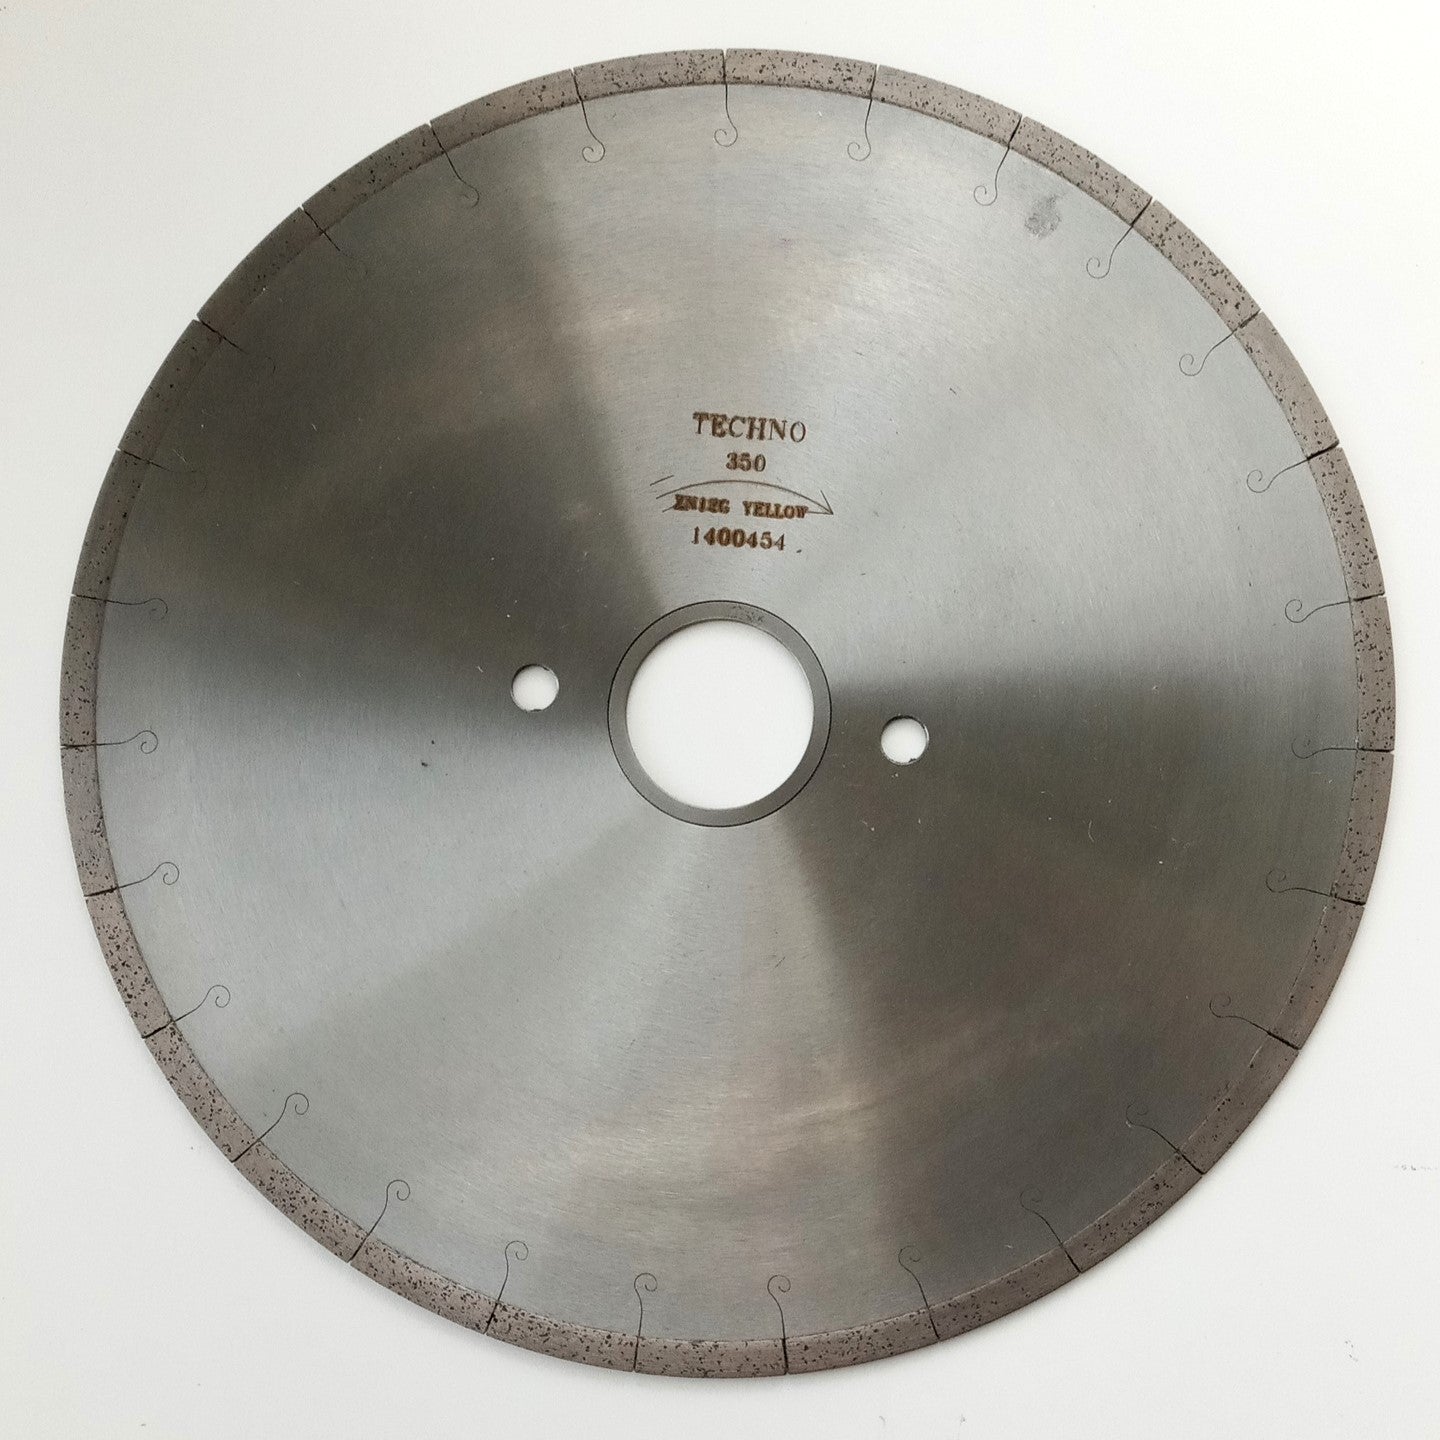 Lackmond 1400454 Techno 14" 50/60mm Arbor Diamond Saw Blade